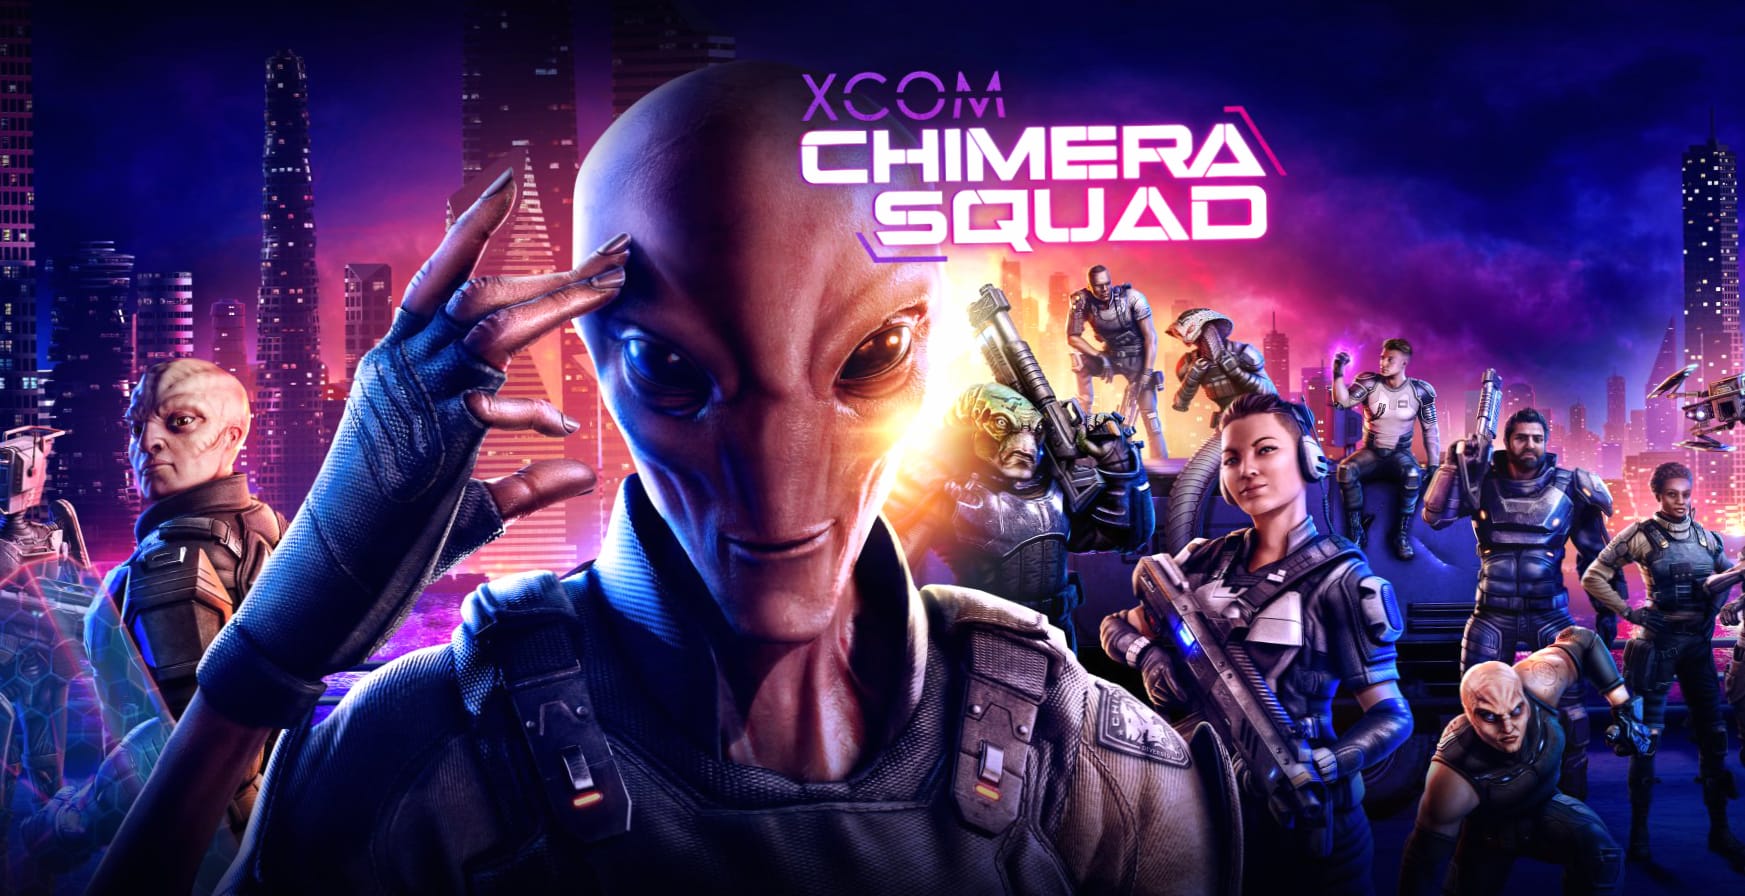 XCOM Chimera Squad at 1334 x 750 iPhone 7 size wallpapers HD quality